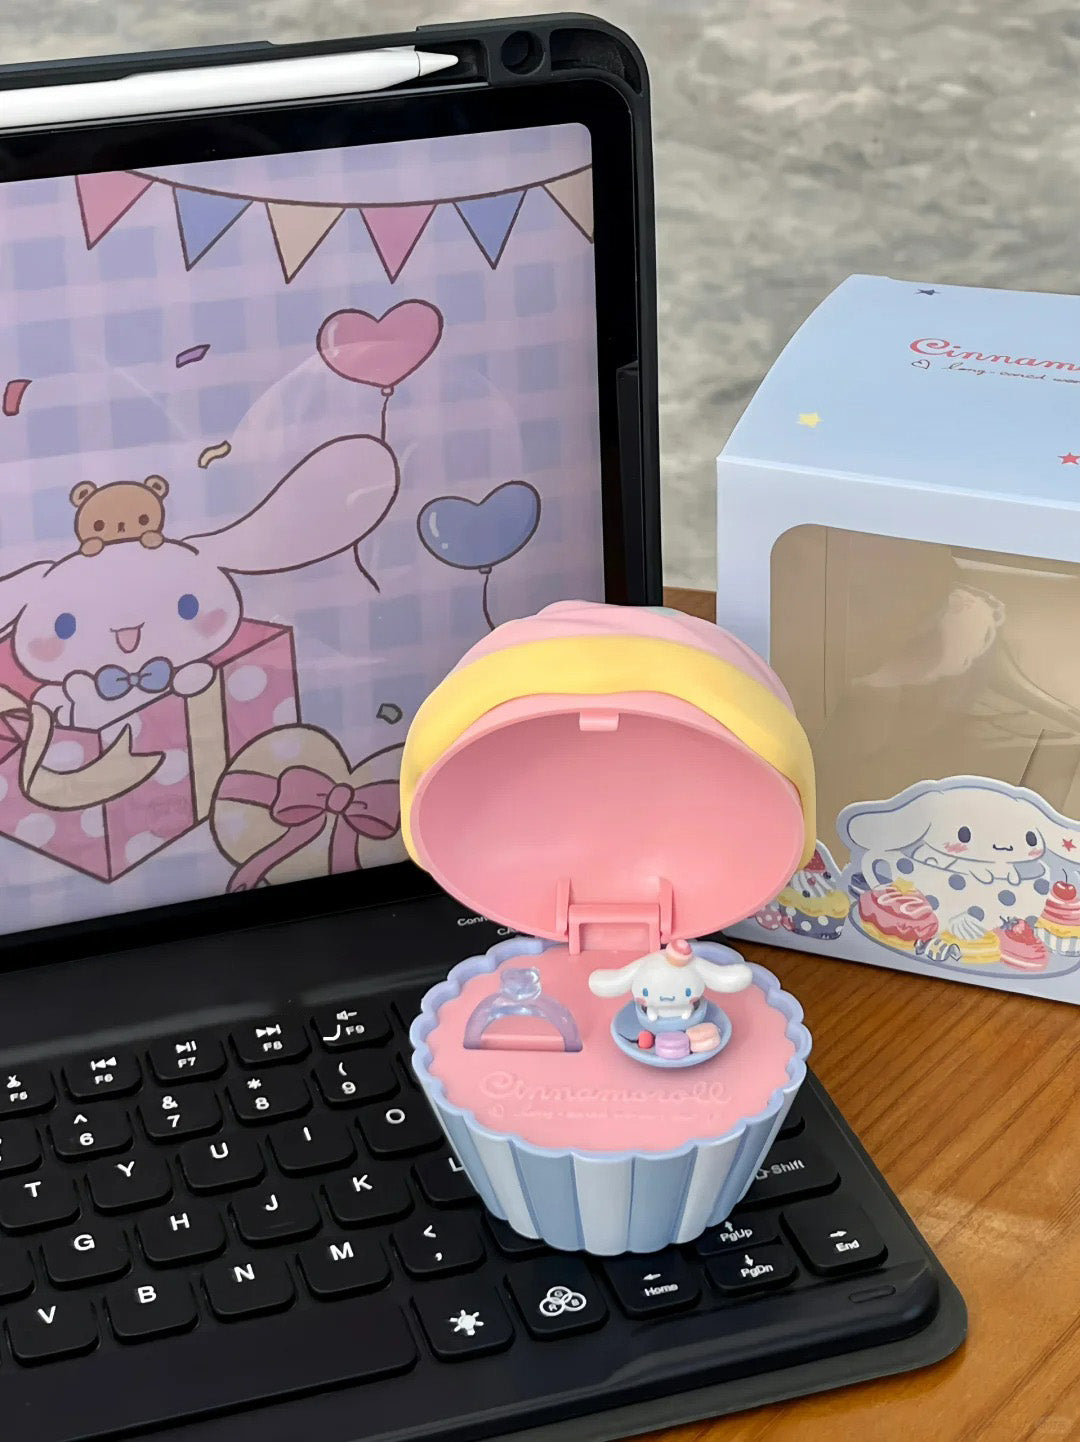 Sanrio cinnamoroll ring cupcake jewelry box